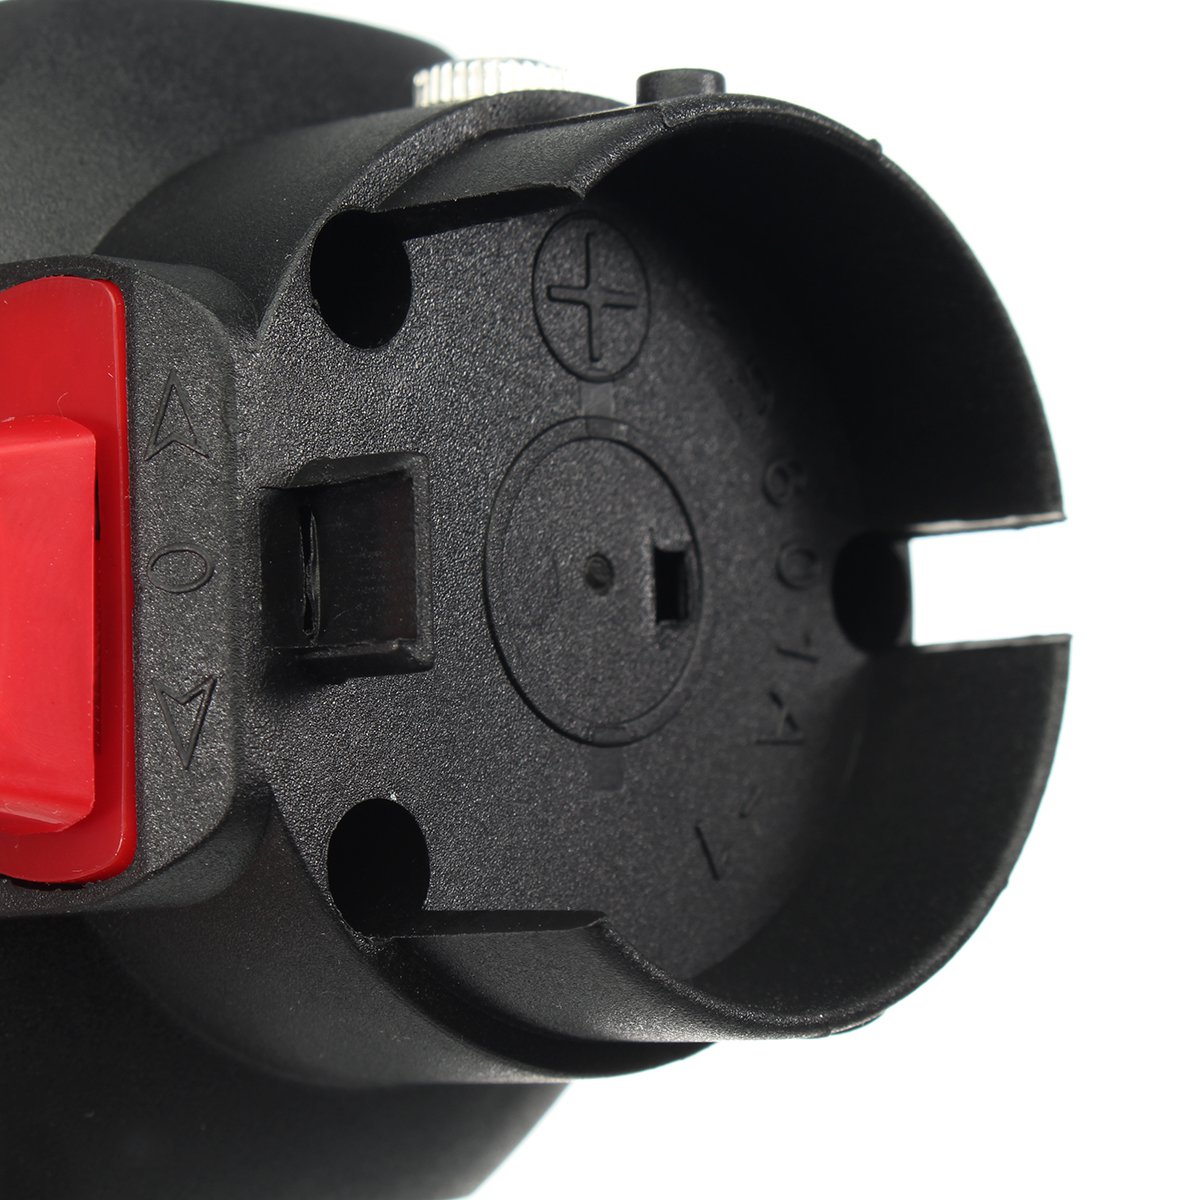 Churrasco Rotisserie Spit Motor BBQ Grill 5V Bateria USB Rotor de suporte